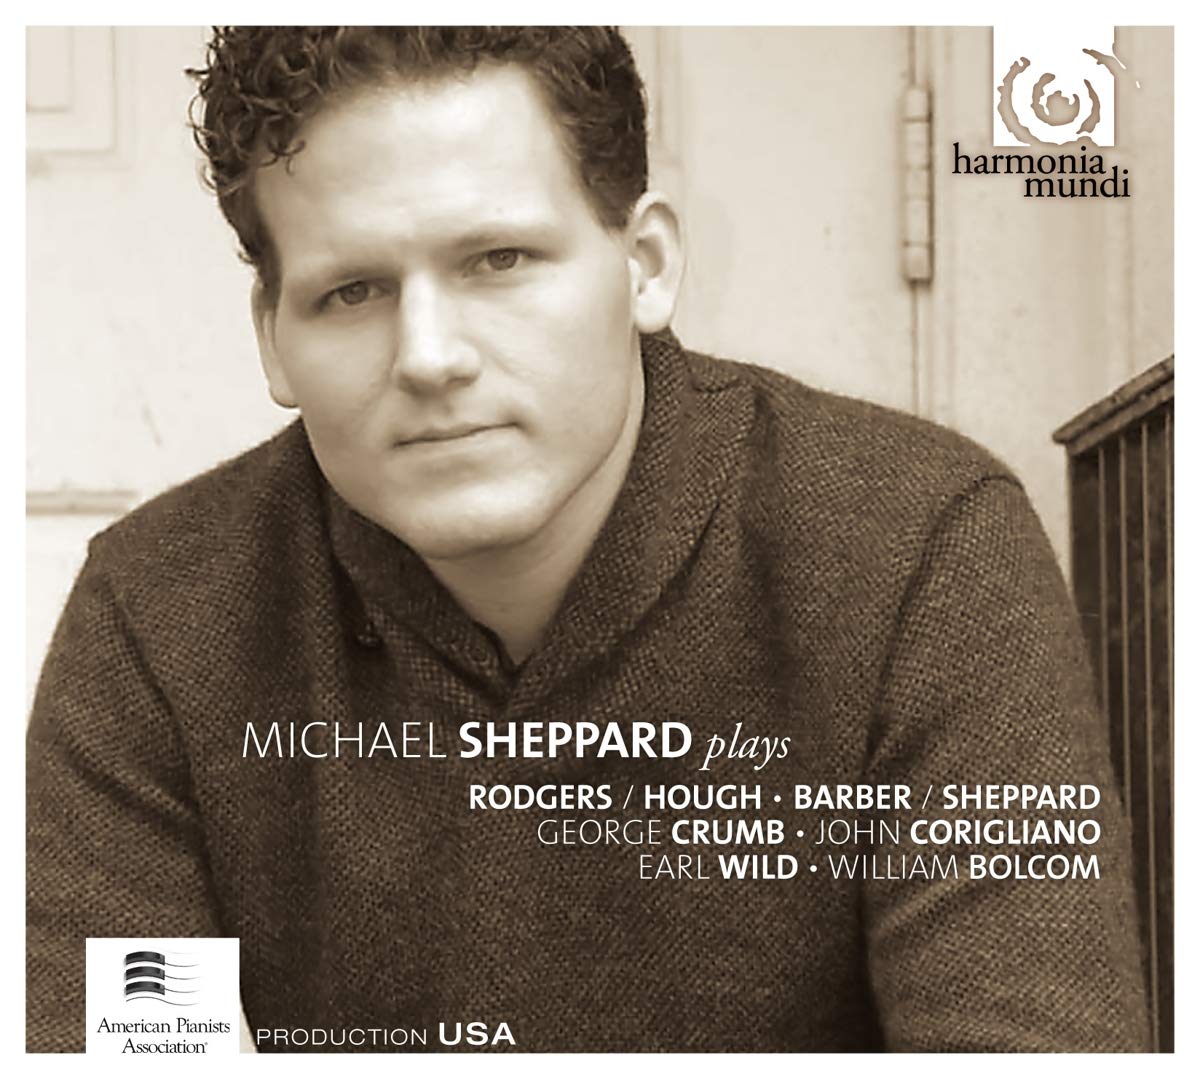 Michael Sheppard plays